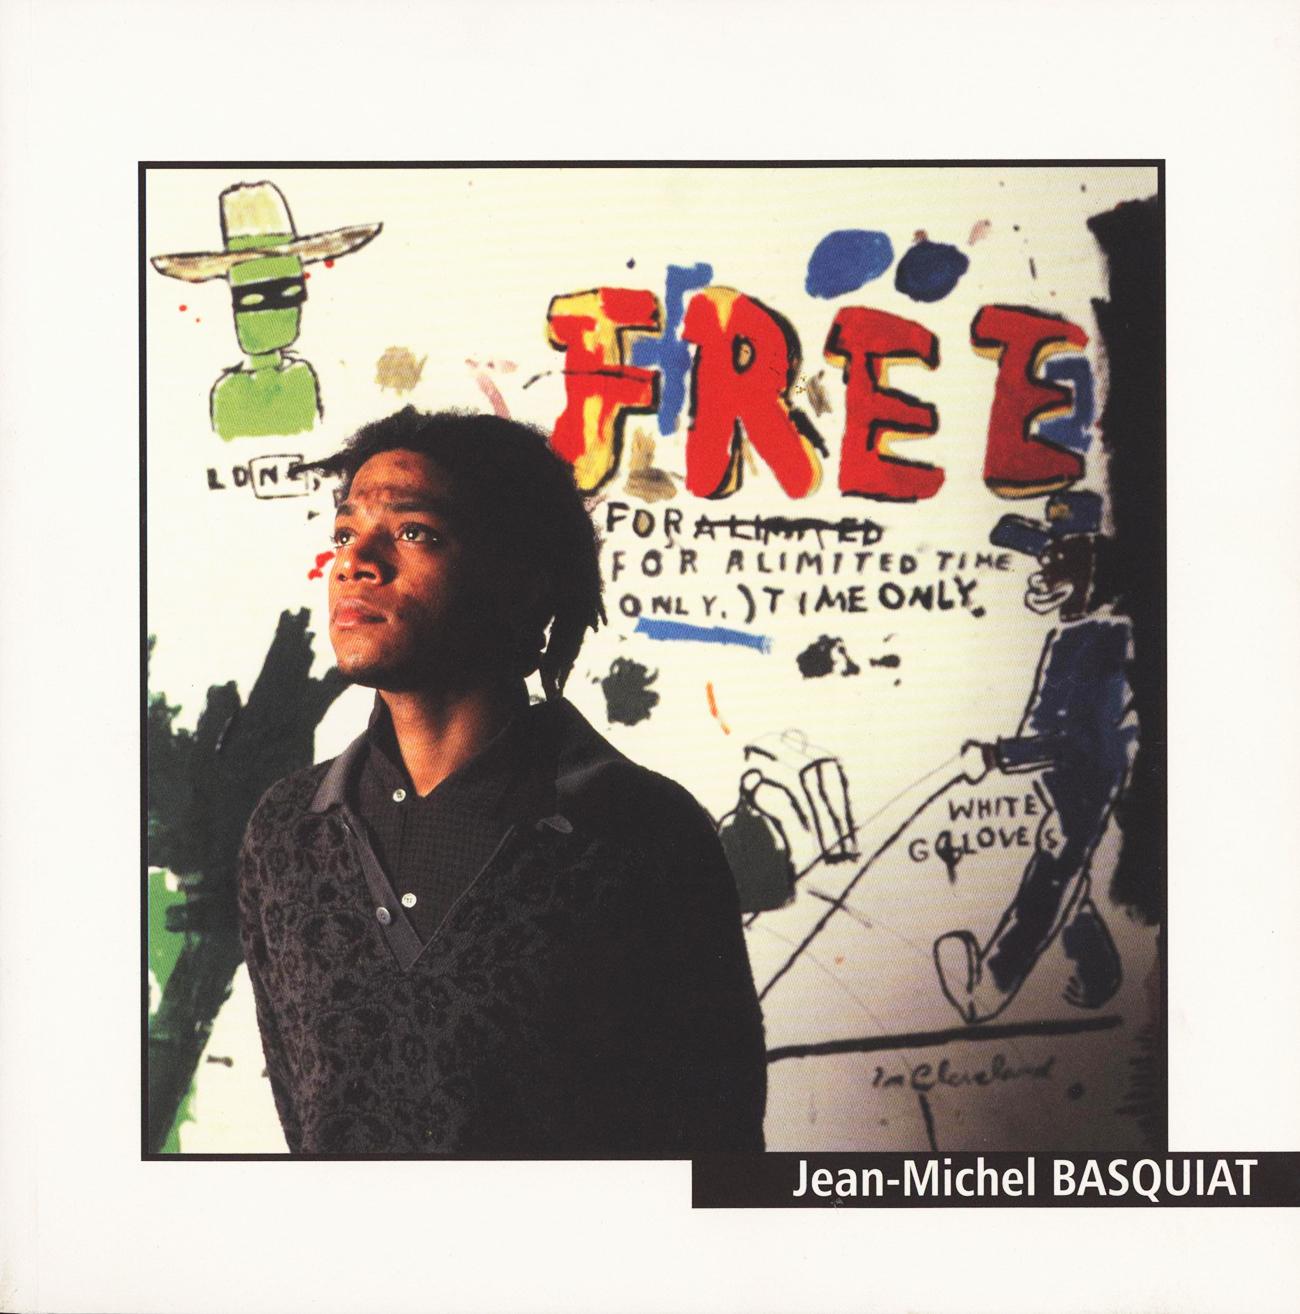 Basquiat: The Transcendental Voyage, at L'Espal, Catalog Le Mans, France, 1999 - Art by Jean-Michel Basquiat